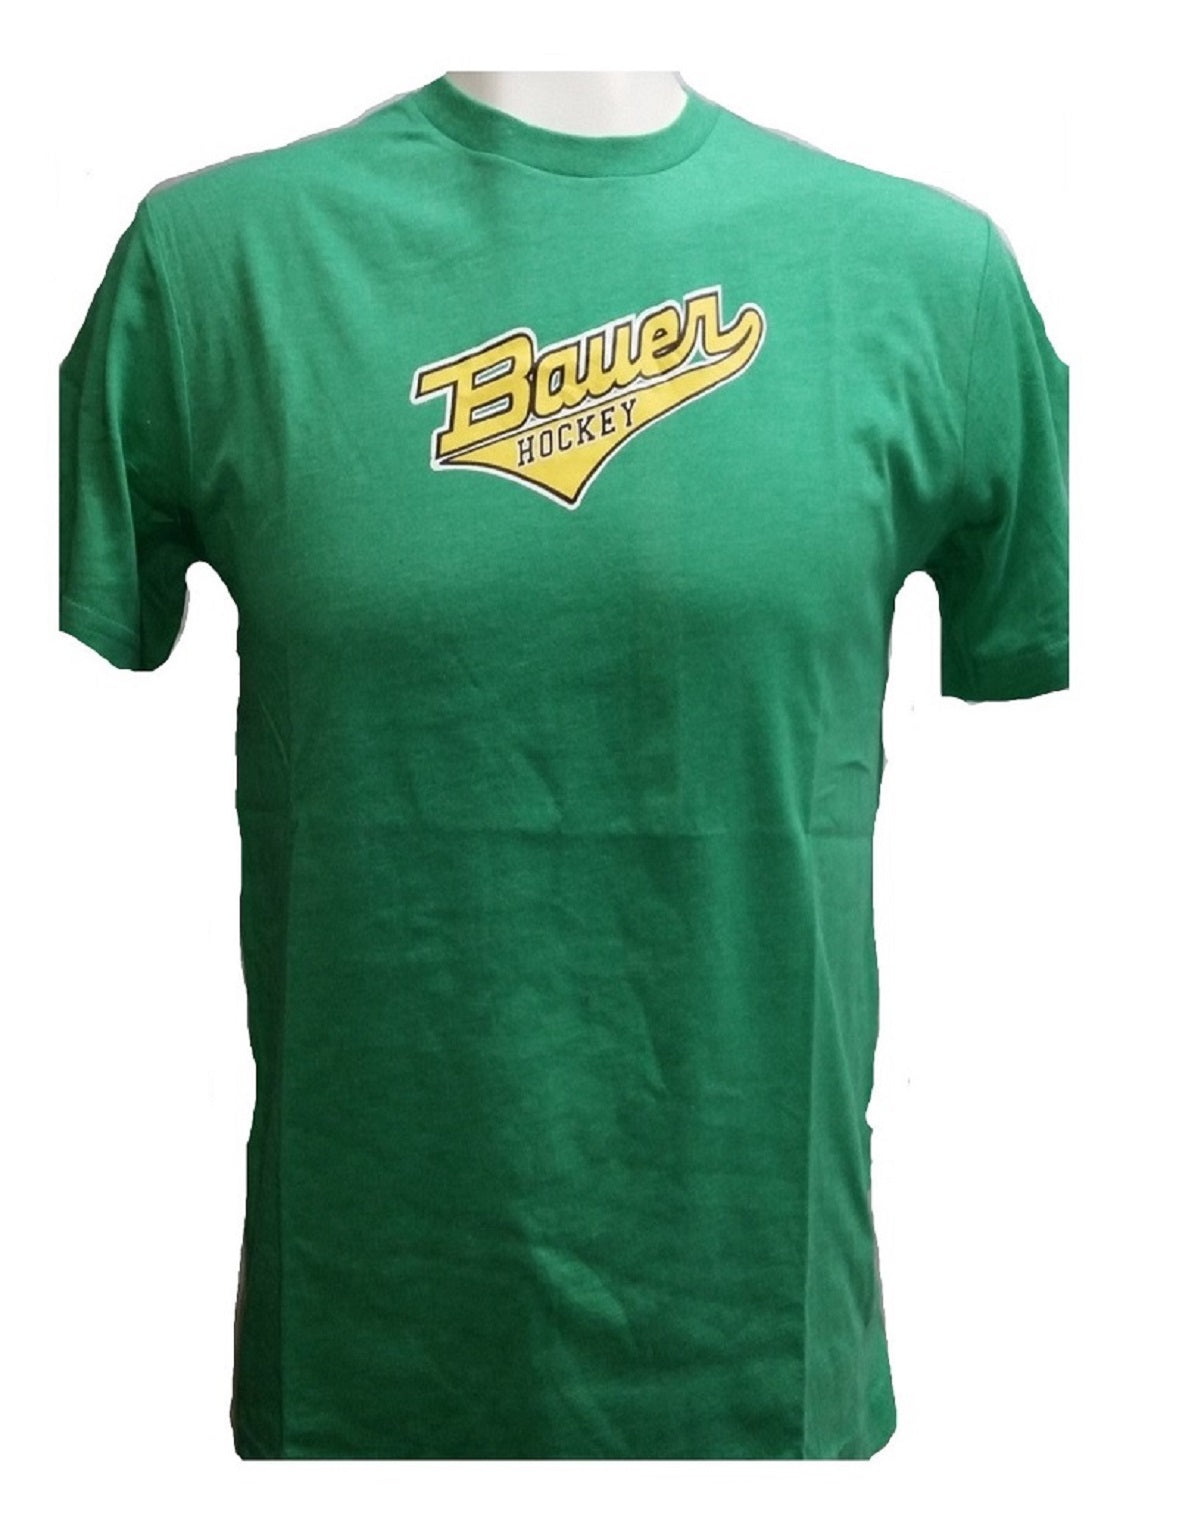 Bauer Hockey Short Sleeve Varsity Youth Green T-Shirt, X-Large